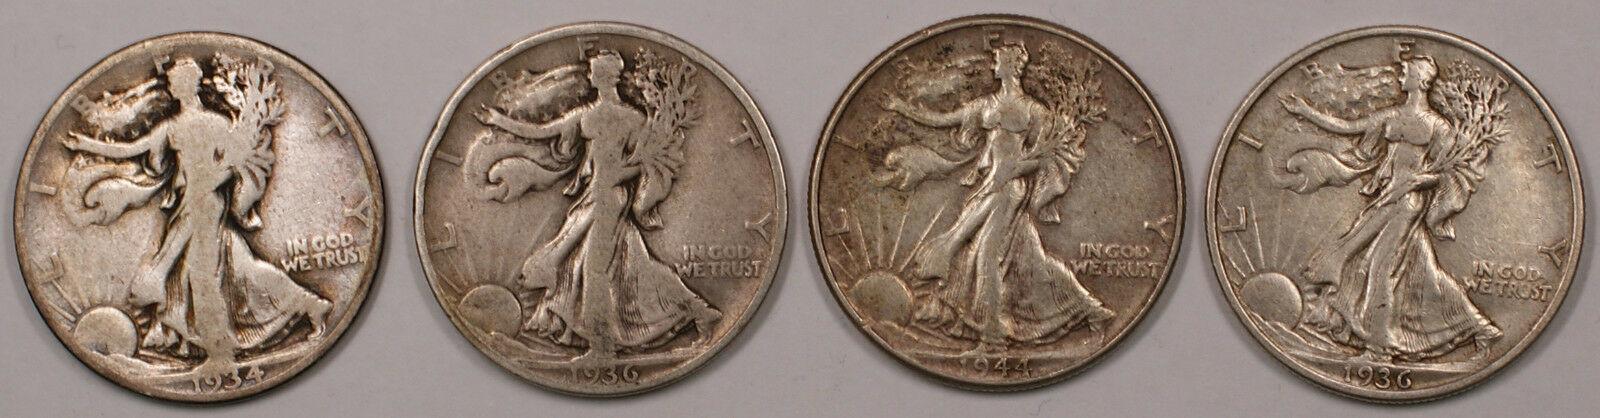 1916-1947 Lot of 10 Walking Liberty Silver Half Dollars 50c G